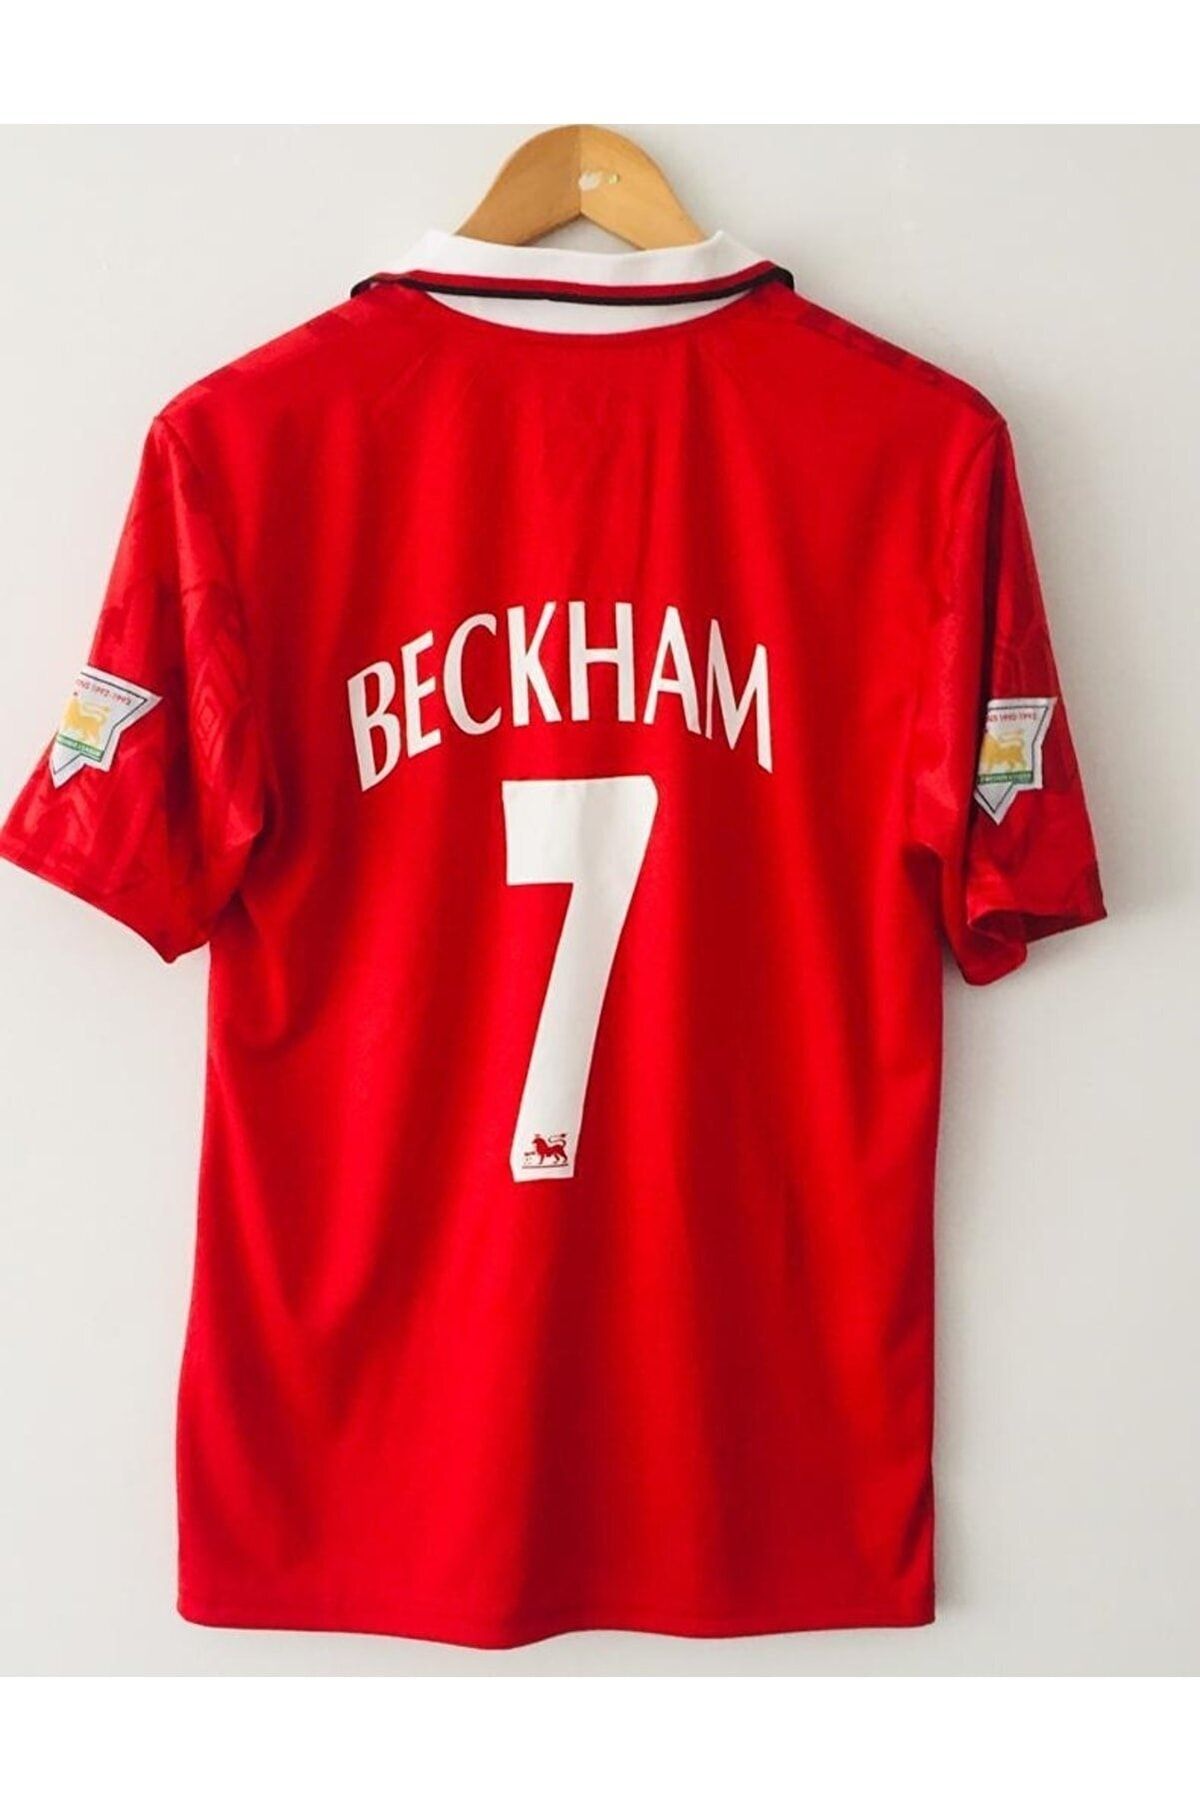 BYSPORTAKUS Manchester United 1992/93 David Beckham Özel Nostalji Forması